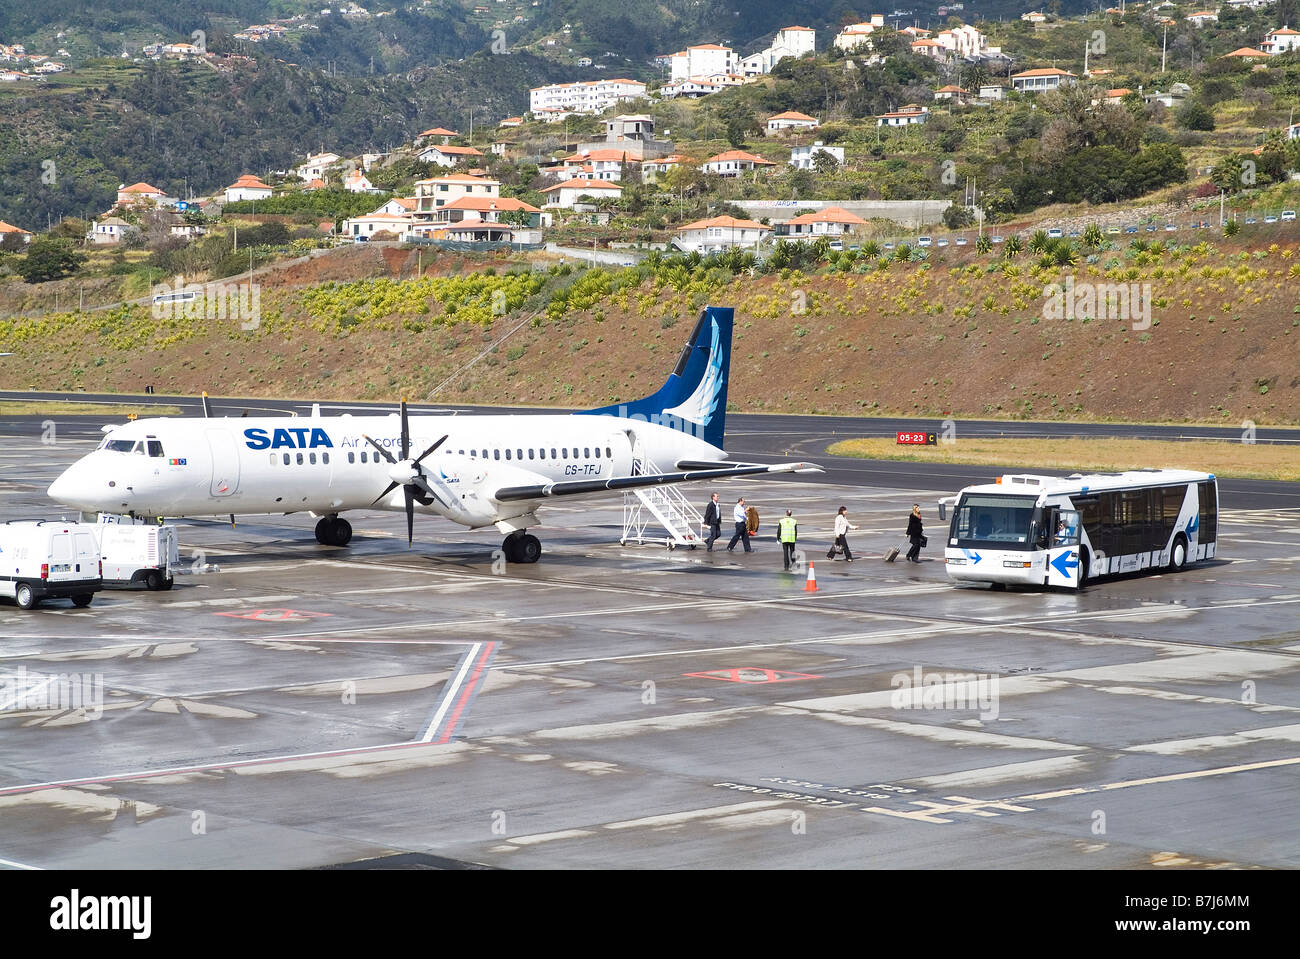 dh Aeroporto de Madeira FUNCHAL AIRPORT MADEIRA SATA Air Azore airline plane discharging passengers Stock Photo